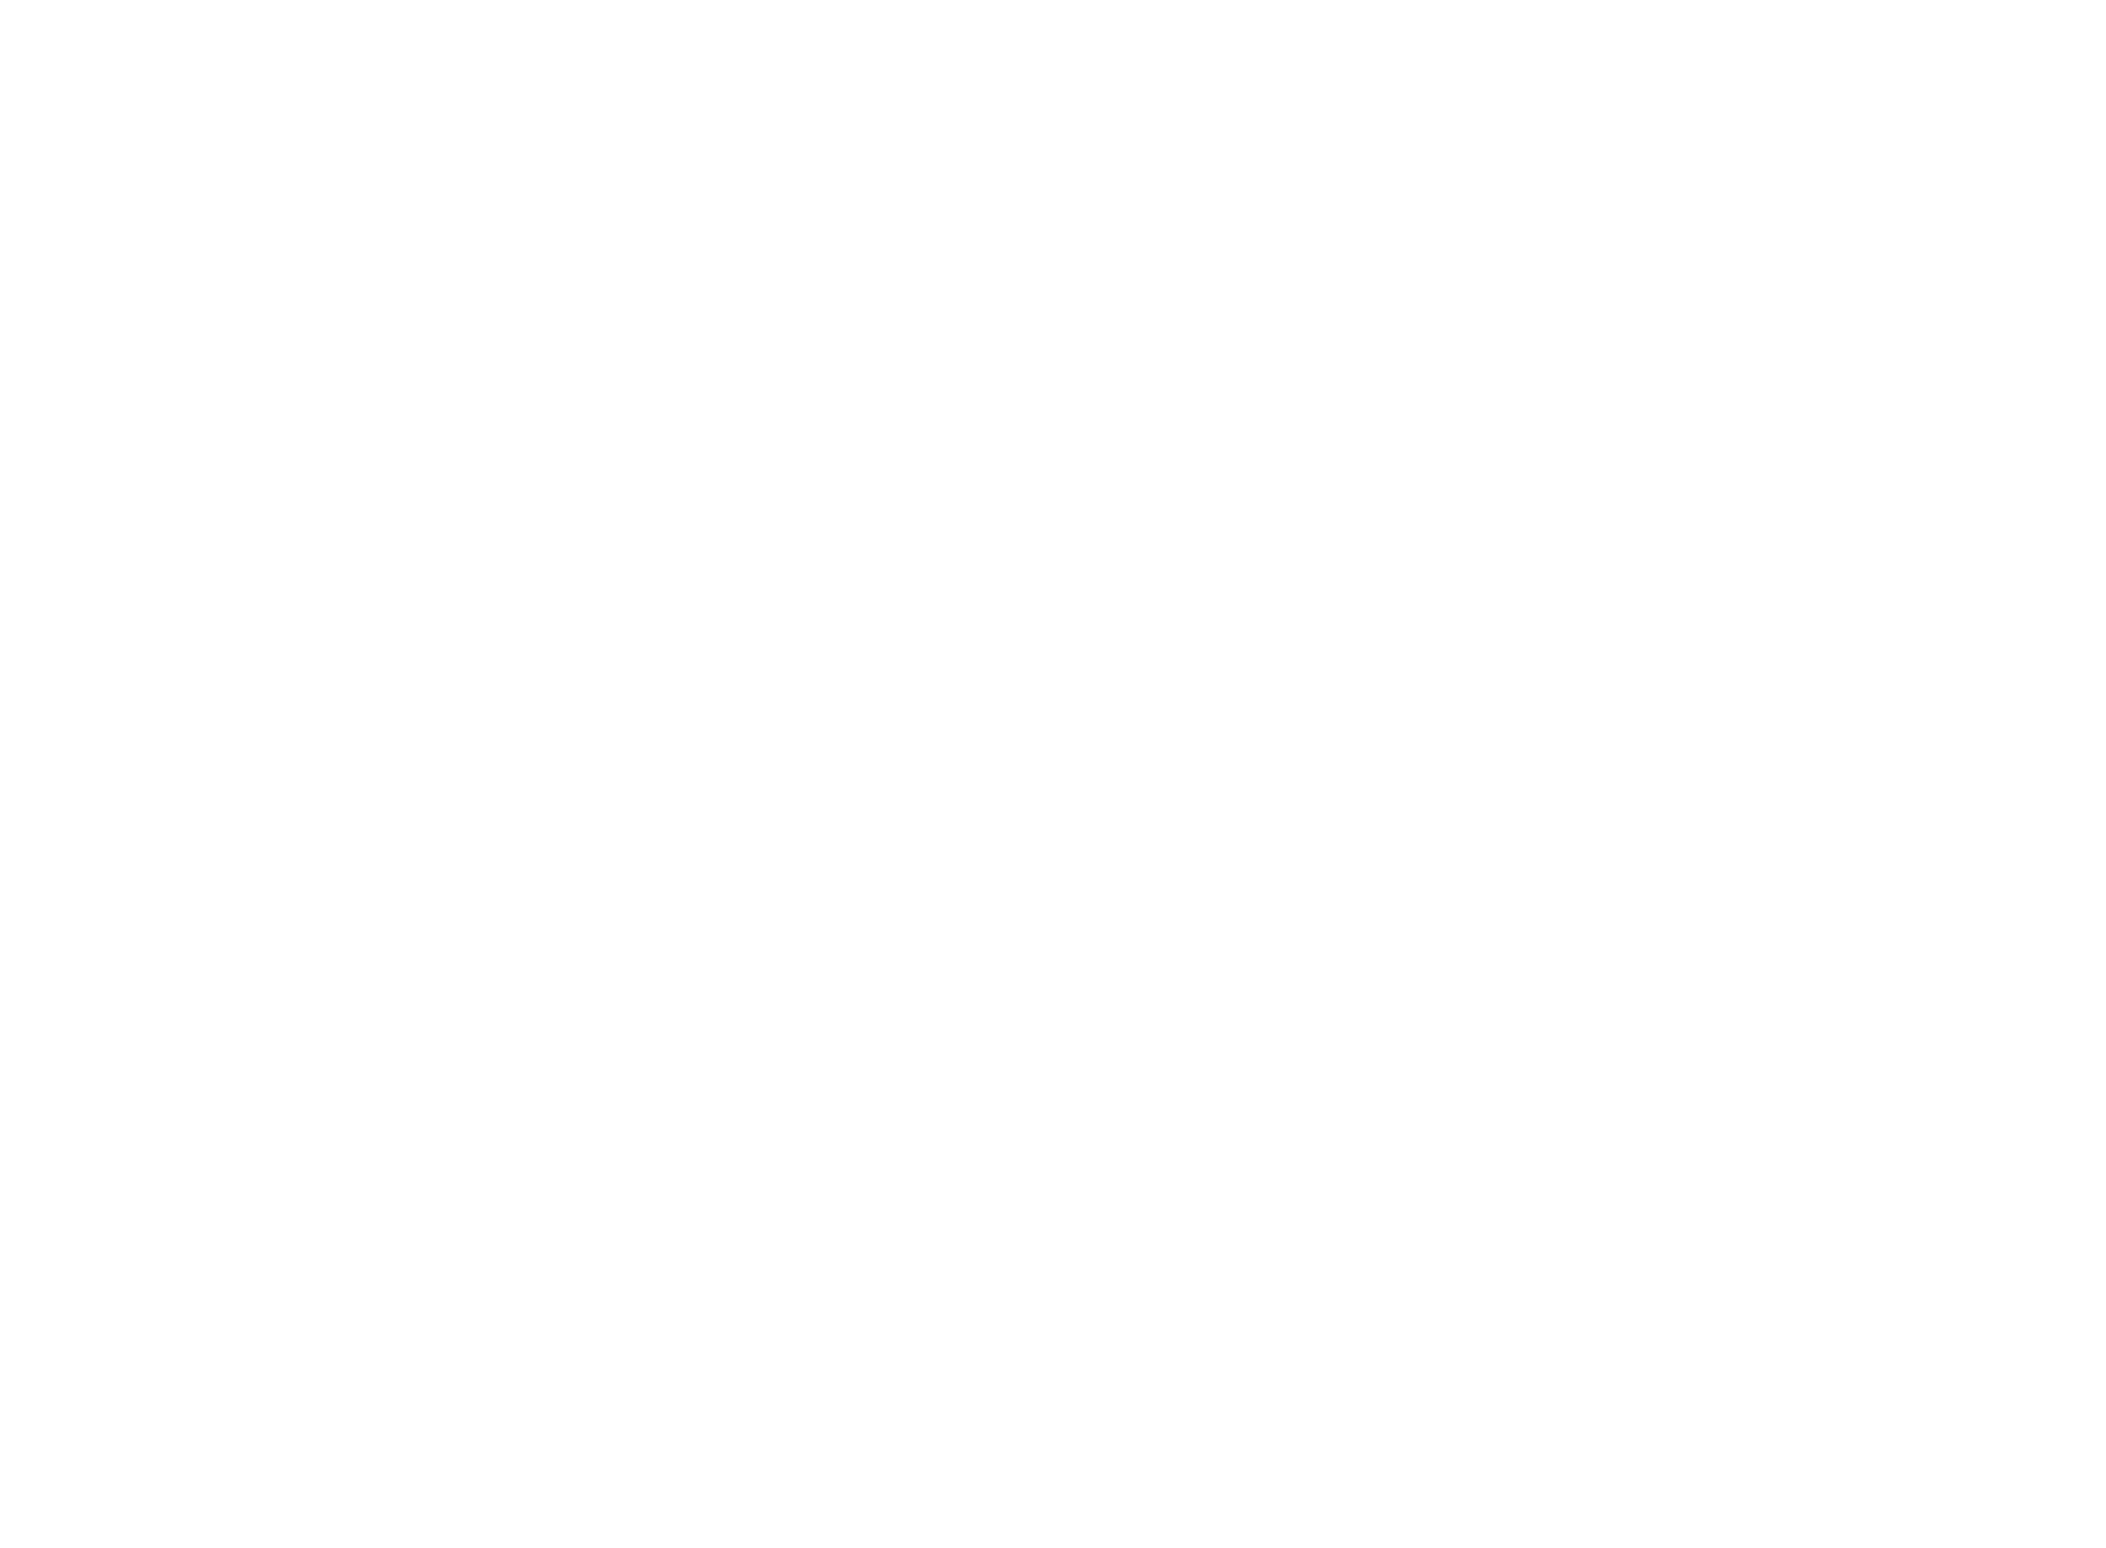 Xcel Logo - Home